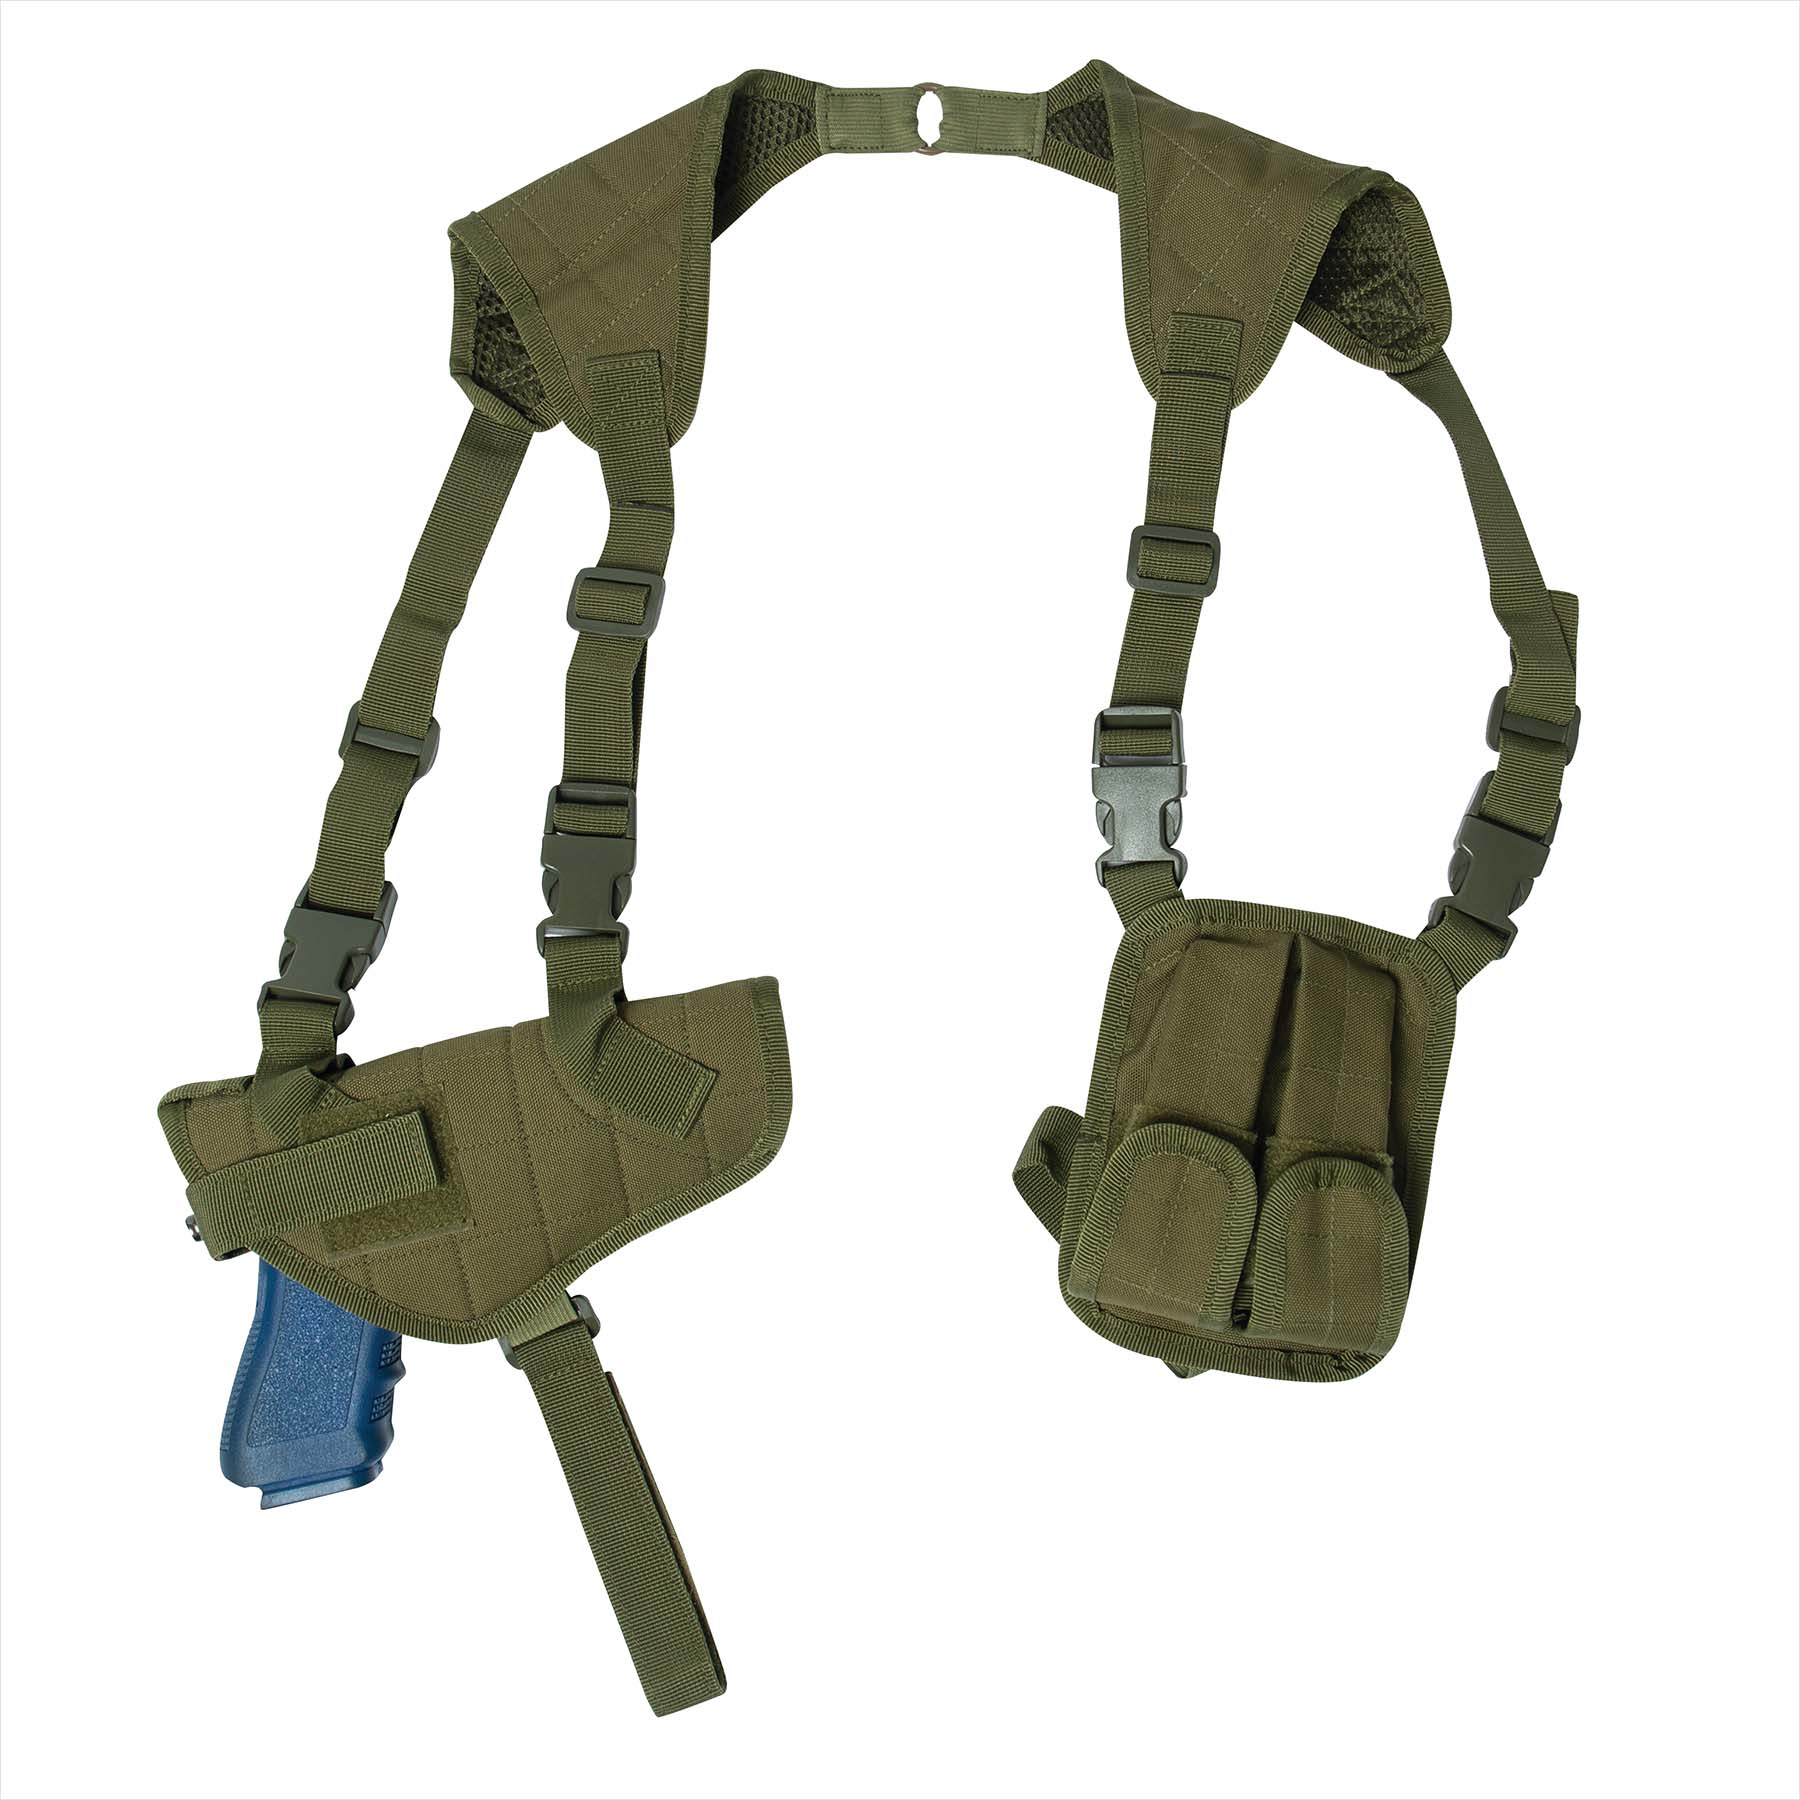 Milspec Ambidextrous Shoulder Holster Concealed Carry Accessories MilTac Tactical Military Outdoor Gear Australia